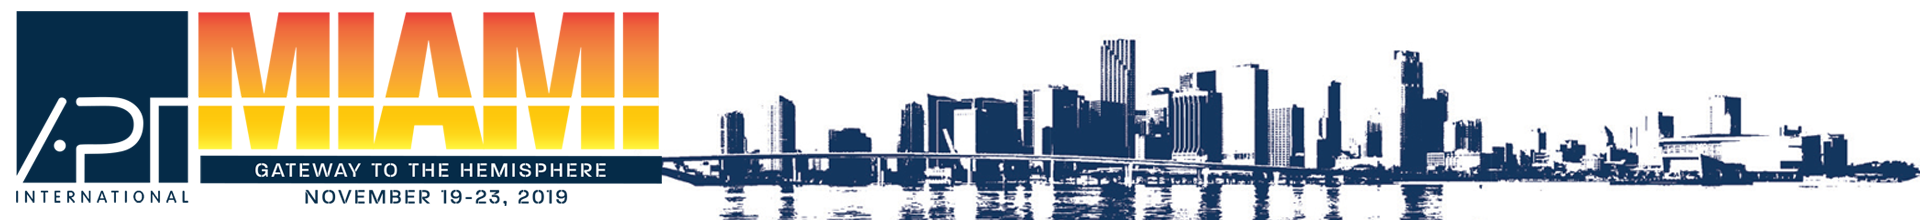 APT Miami 2019 Event Banner